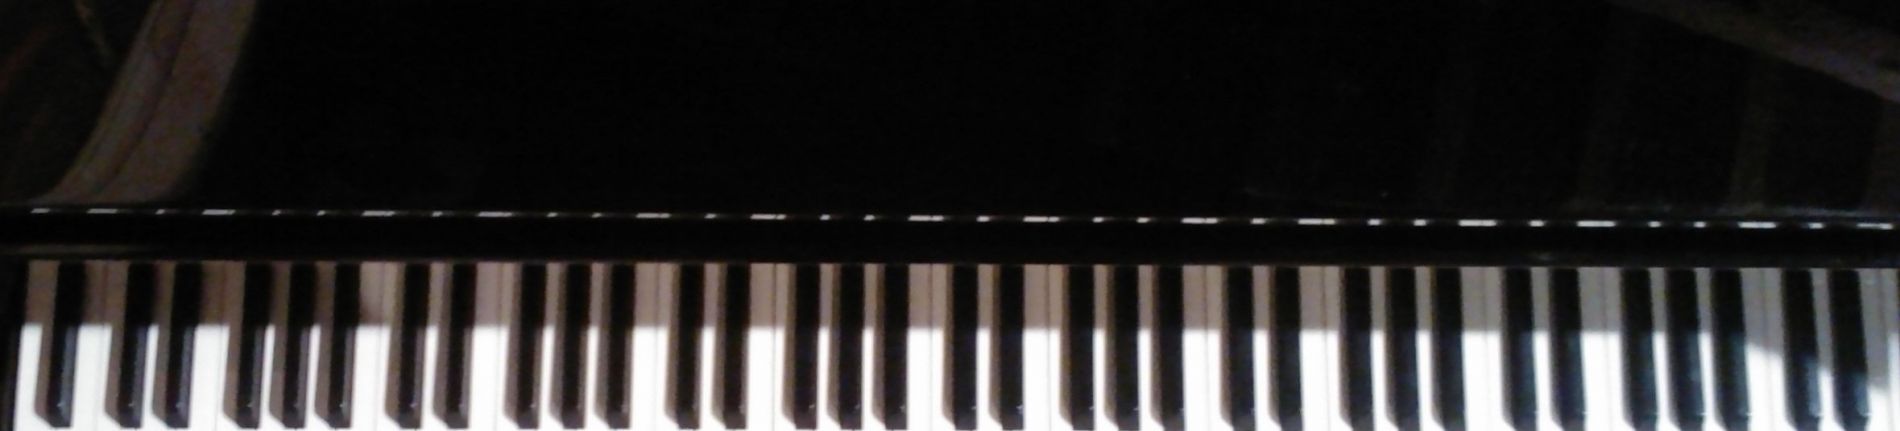 Teclat piano